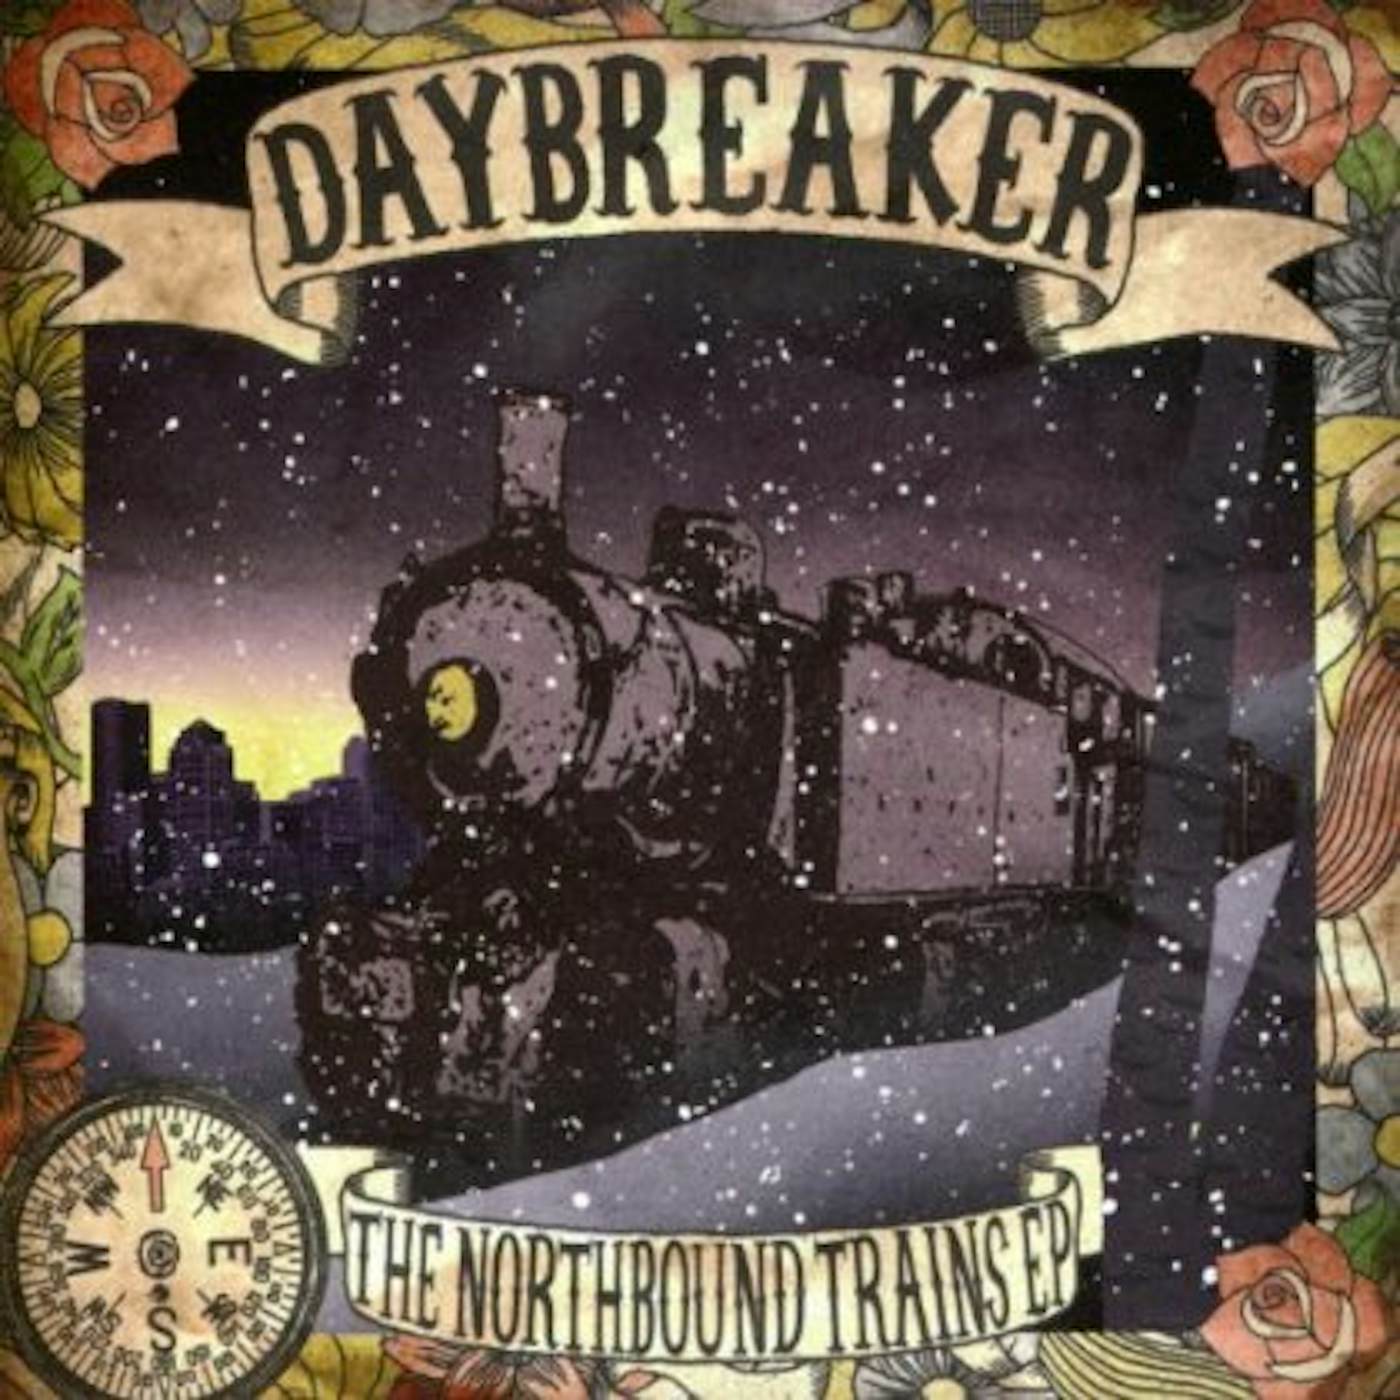 Daybreaker NORTHBOUND TRAINS (EP) Vinyl Record